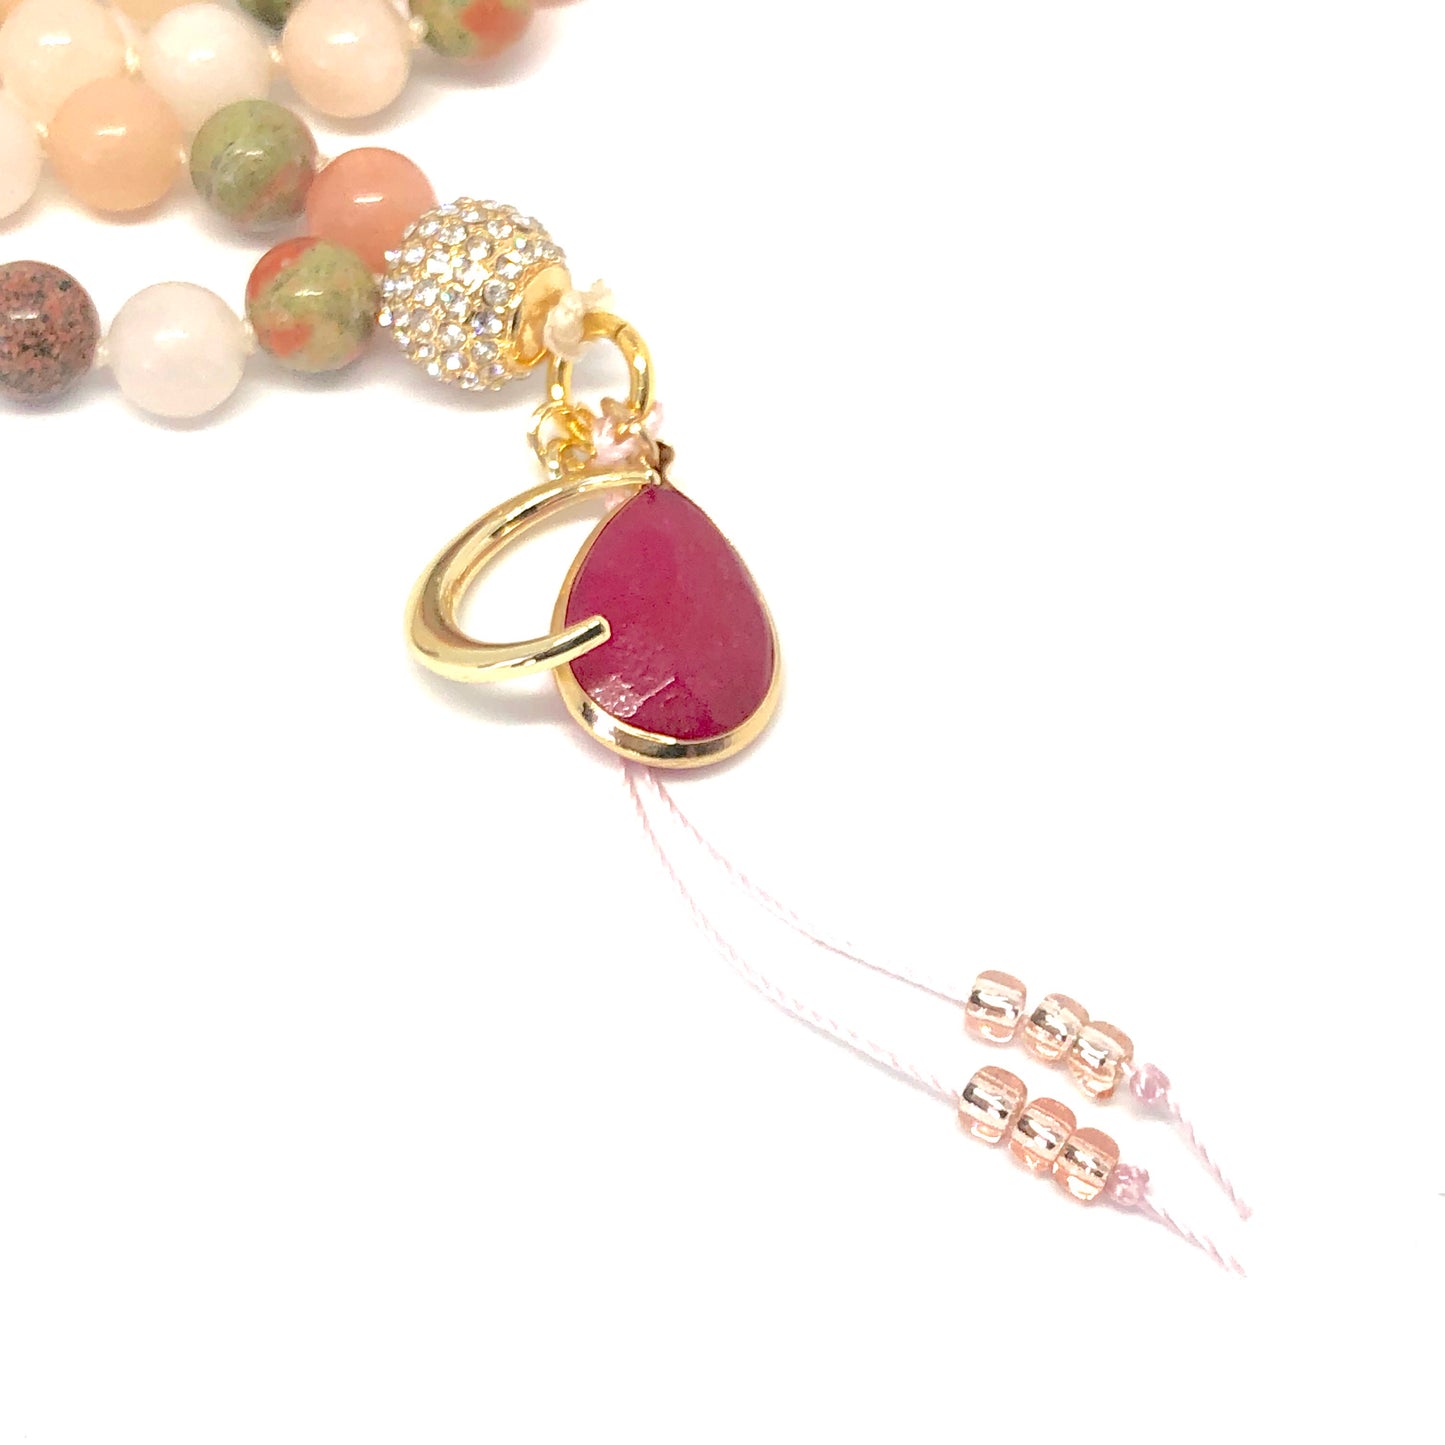 Pink Opal + Unakite 108 Bead Moon Mala Necklace